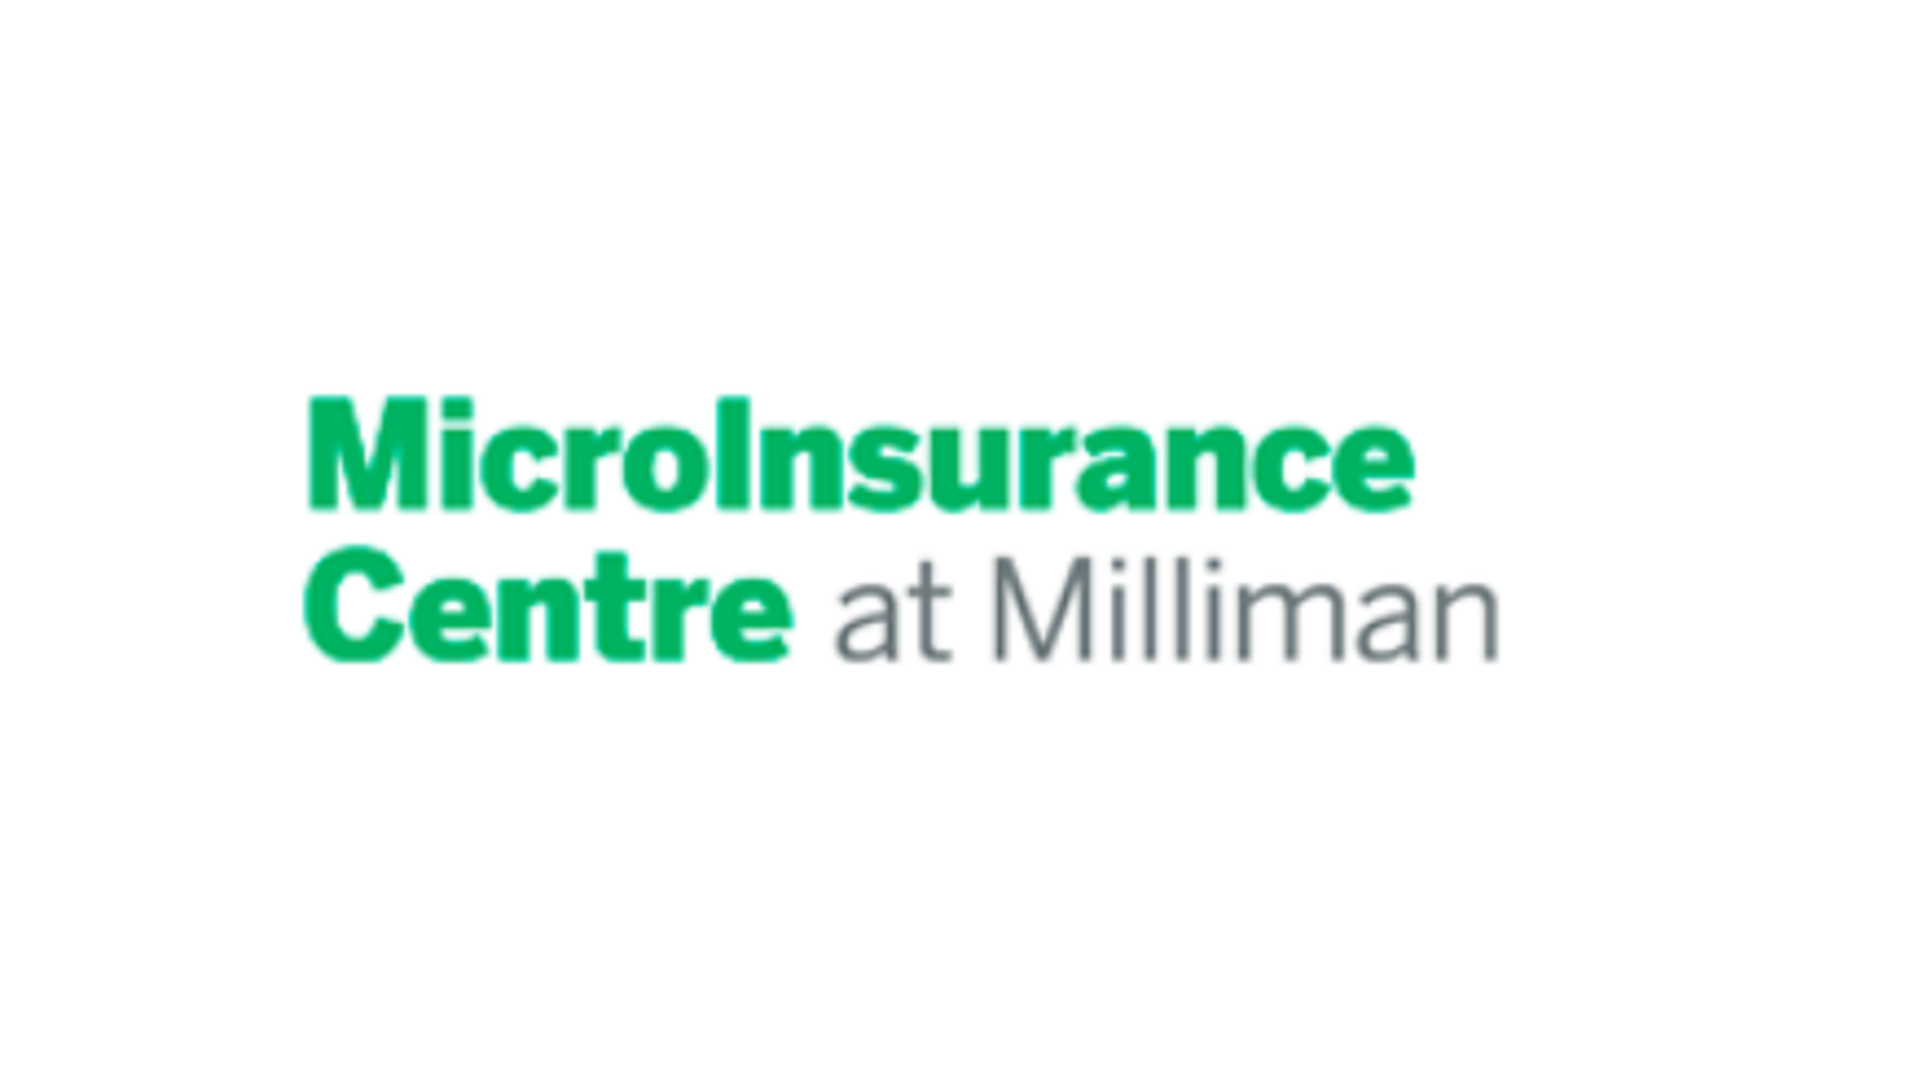 MicroInsurance Center Milliman